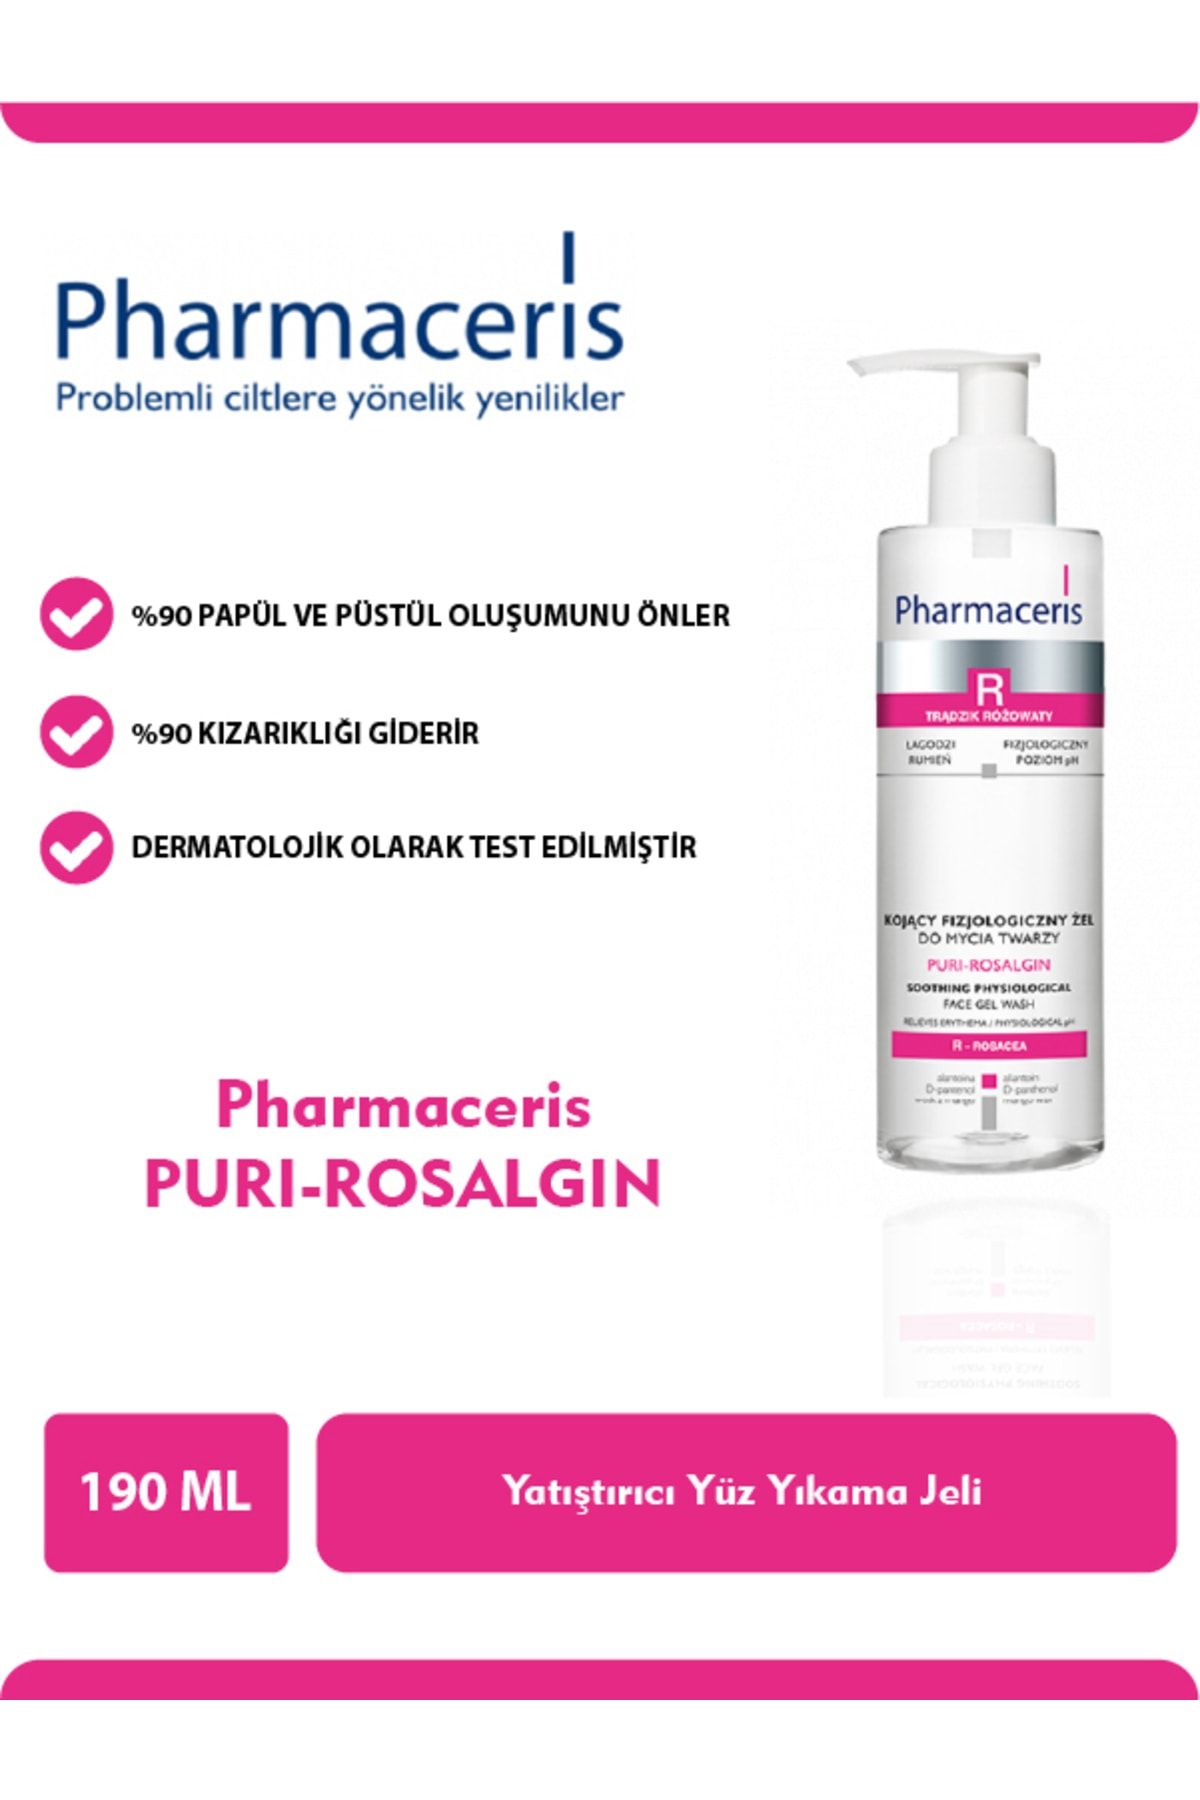 Pharmaceris R Puri-rosalgin Face Gel Wash 190 ml